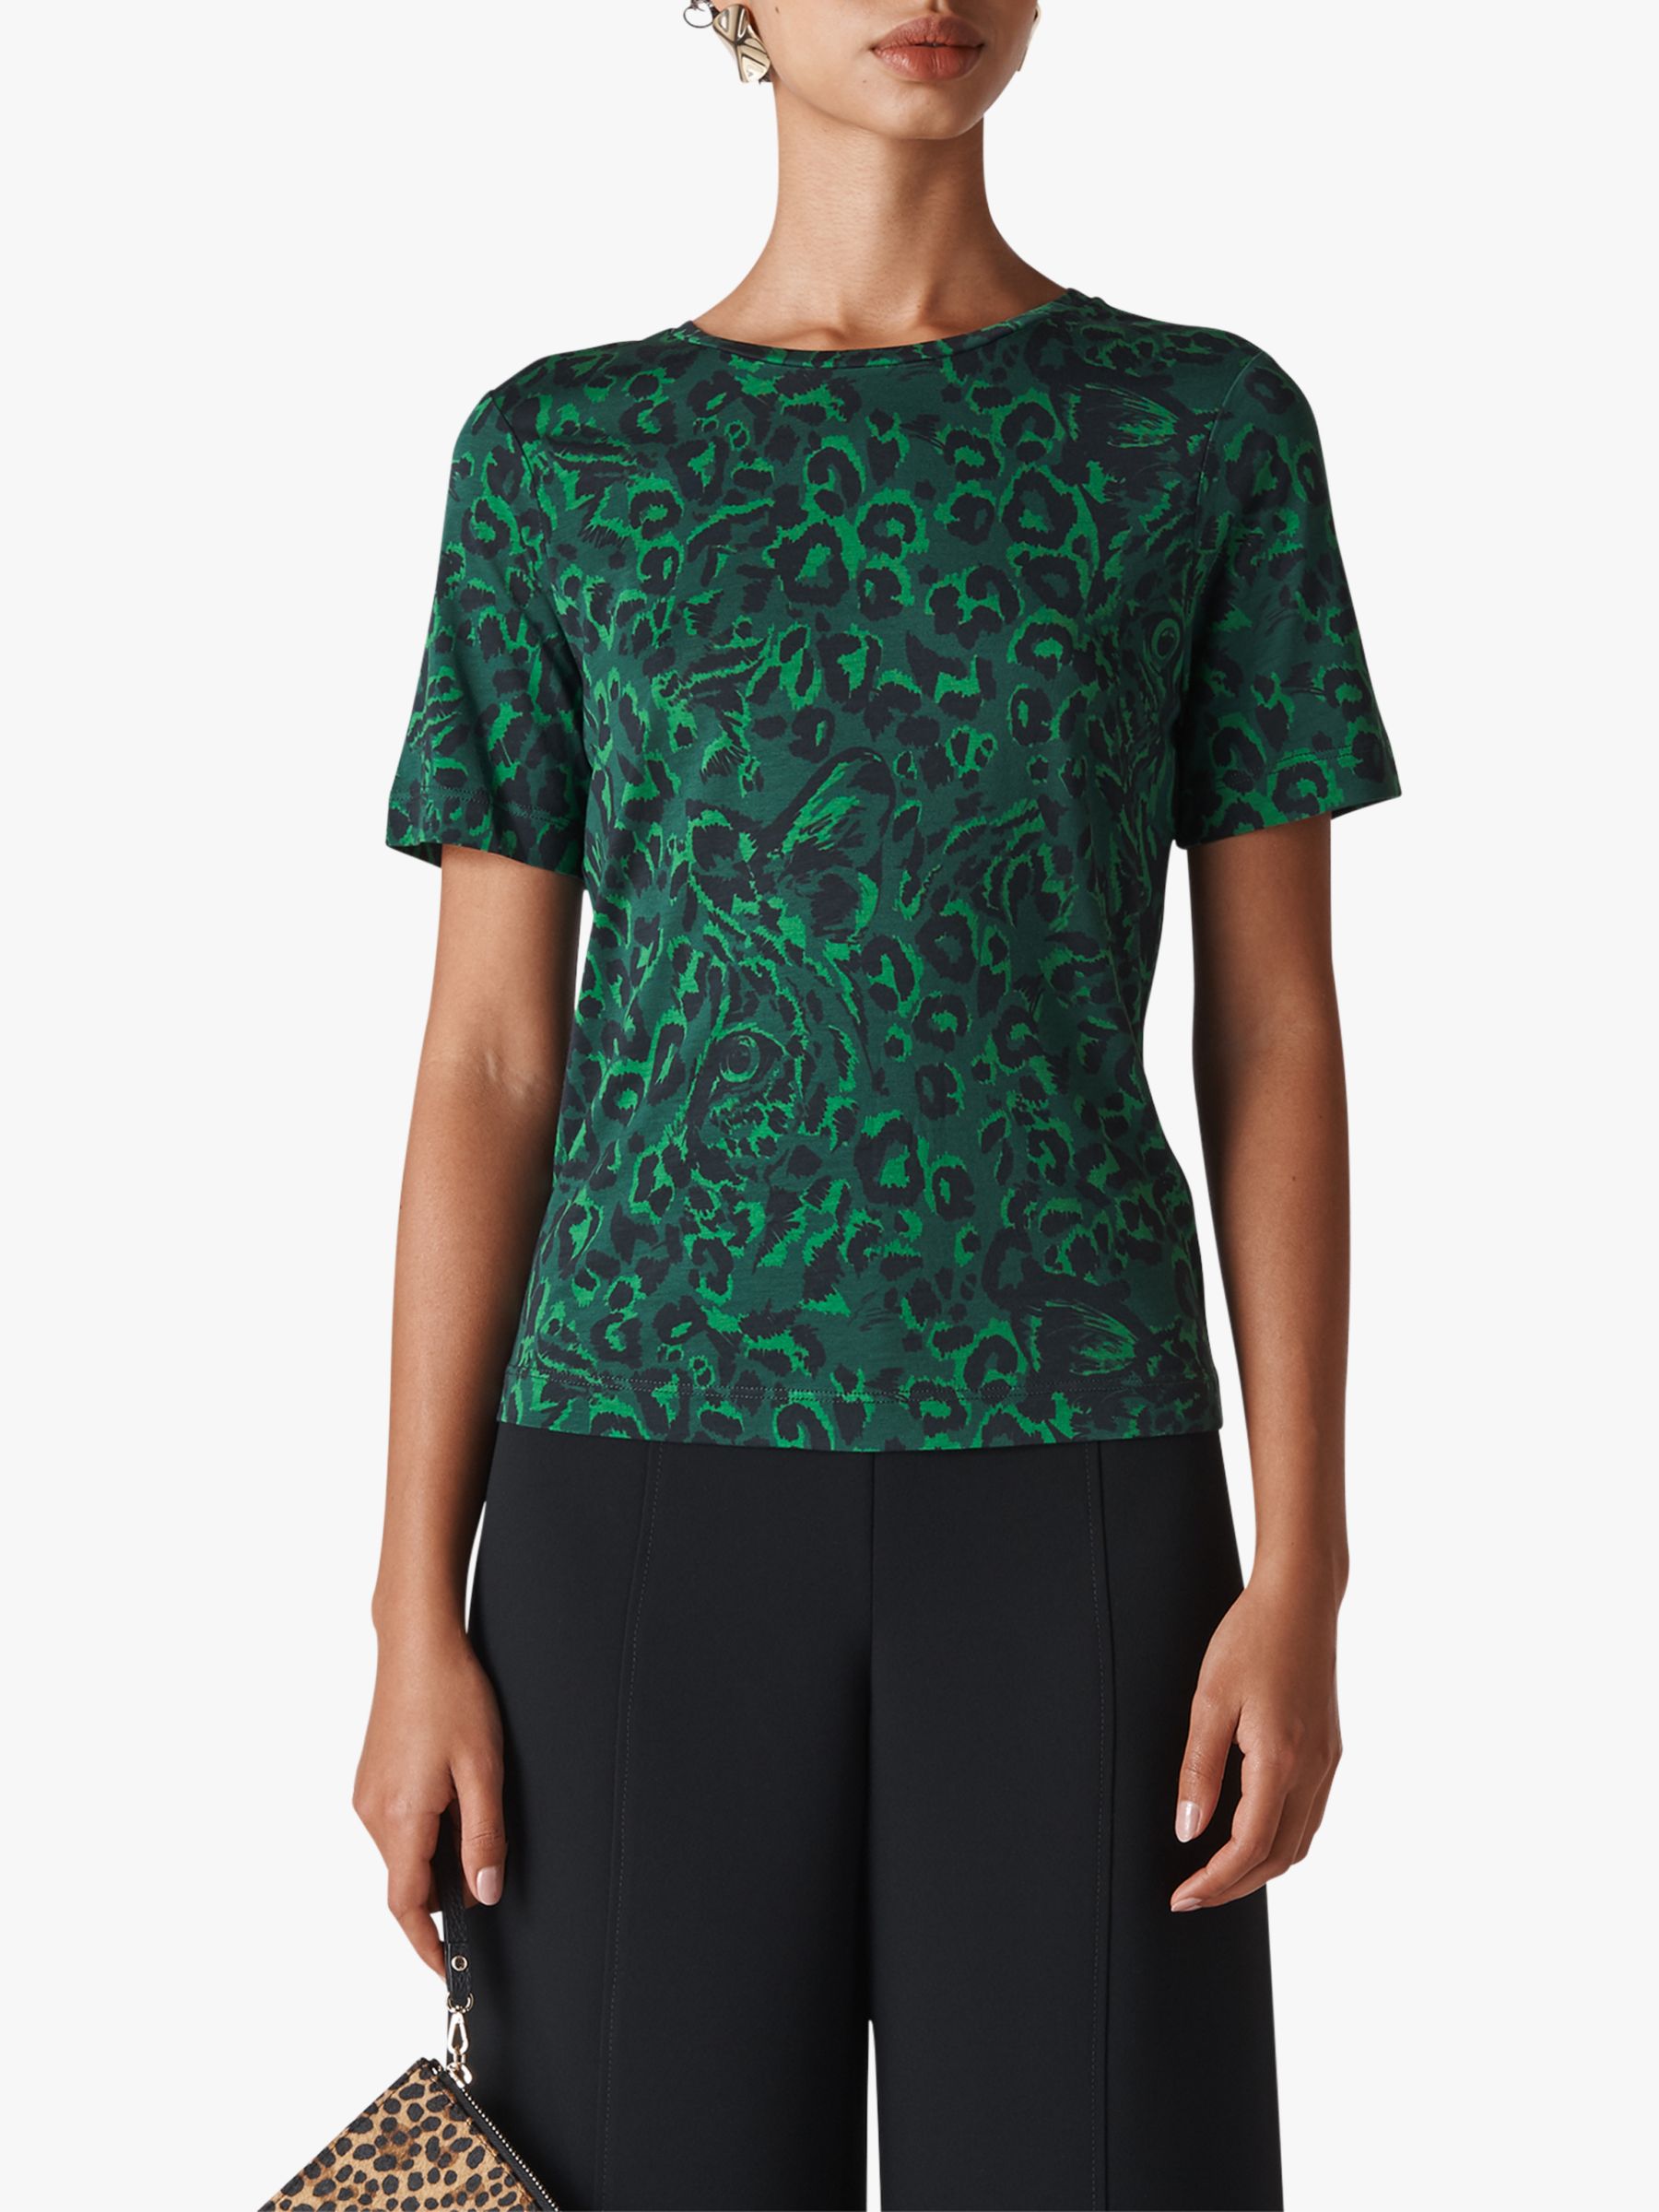 Whistles Jungle Cat Animal Print T-Shirt, Green/Multi